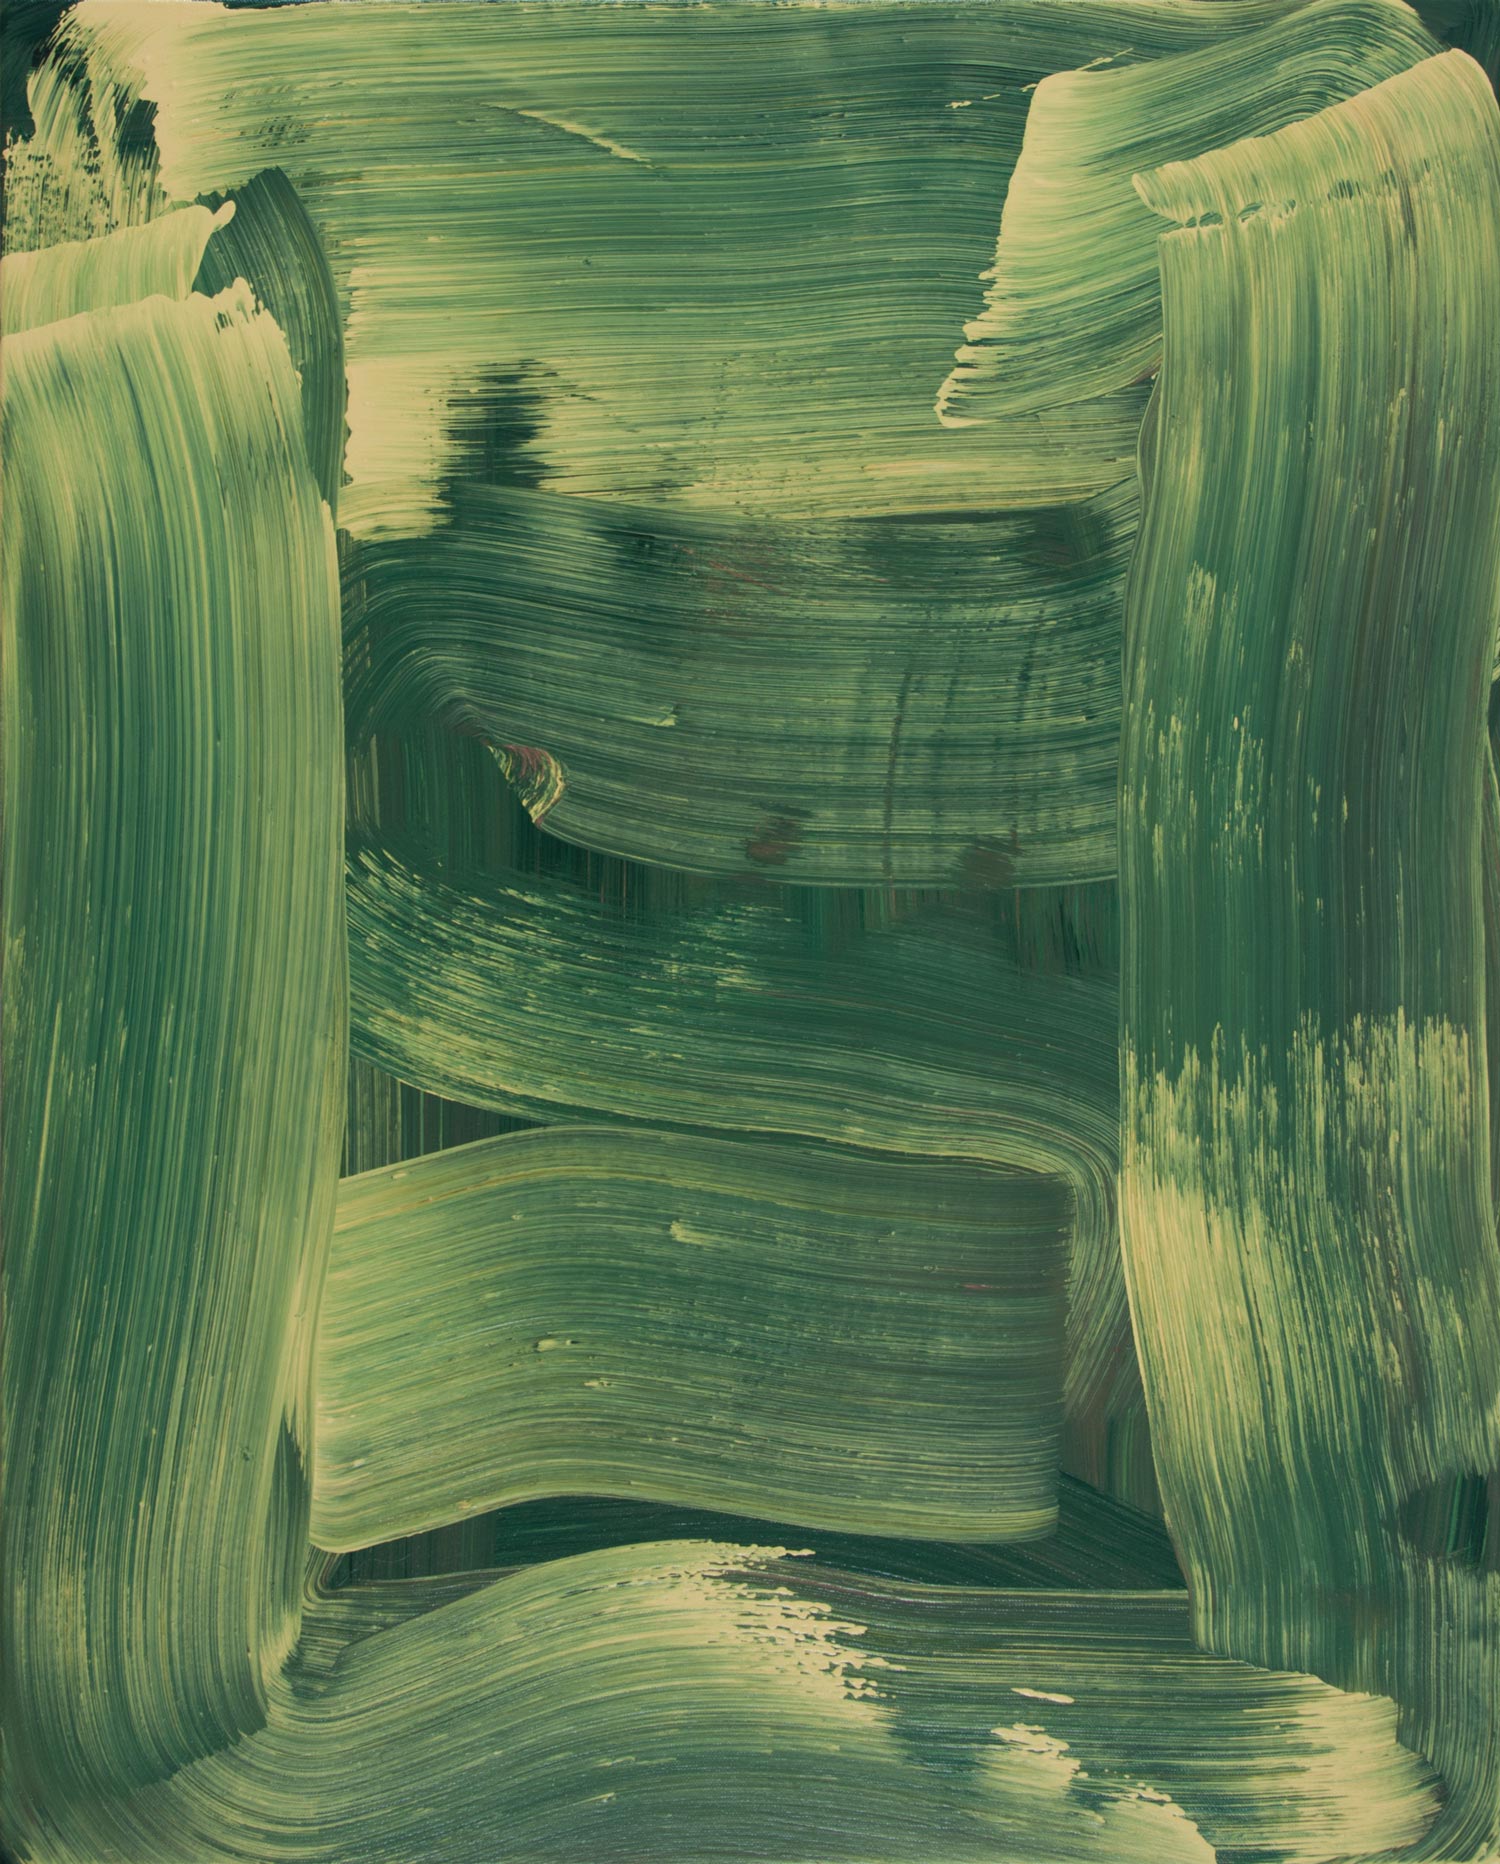   Serpentine , 2014 oil on canvas 30 x 24 in.  Available through IdeelArt:  https://www.ideelart.com/artwork/anne-russinof/serpentine  